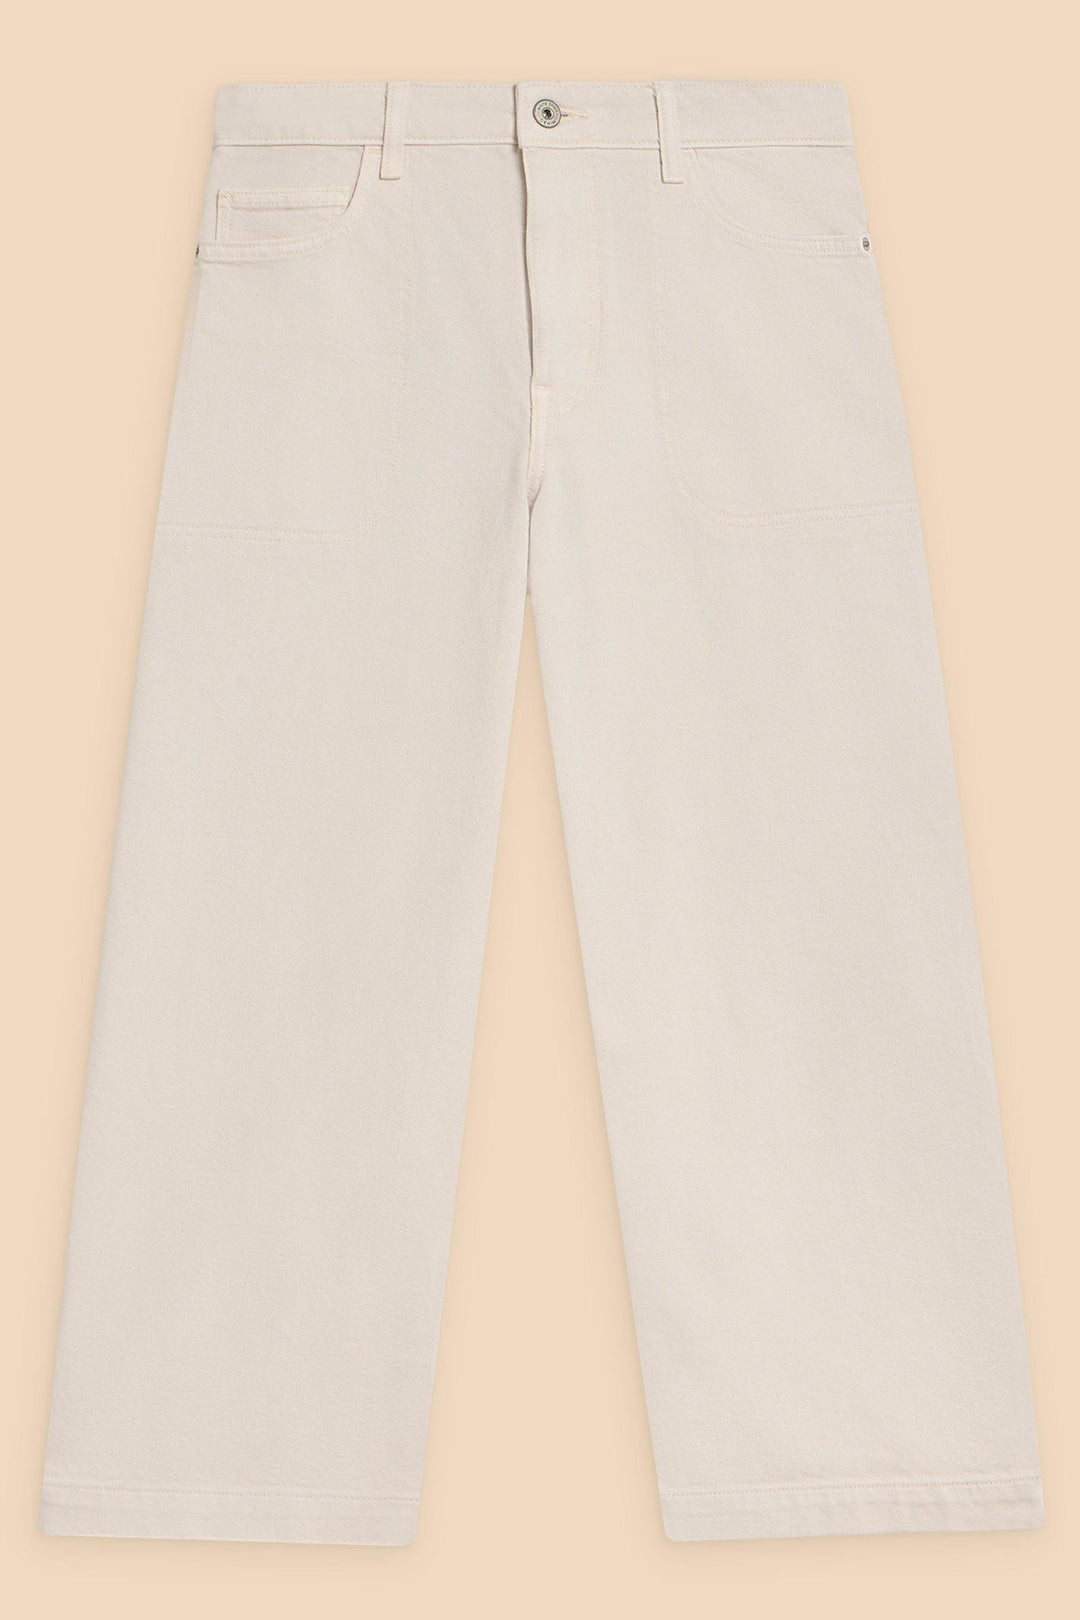 White Stuff 440997 Tia Natural White Wide Leg Cropped Jeans - Shirley Allum Boutique